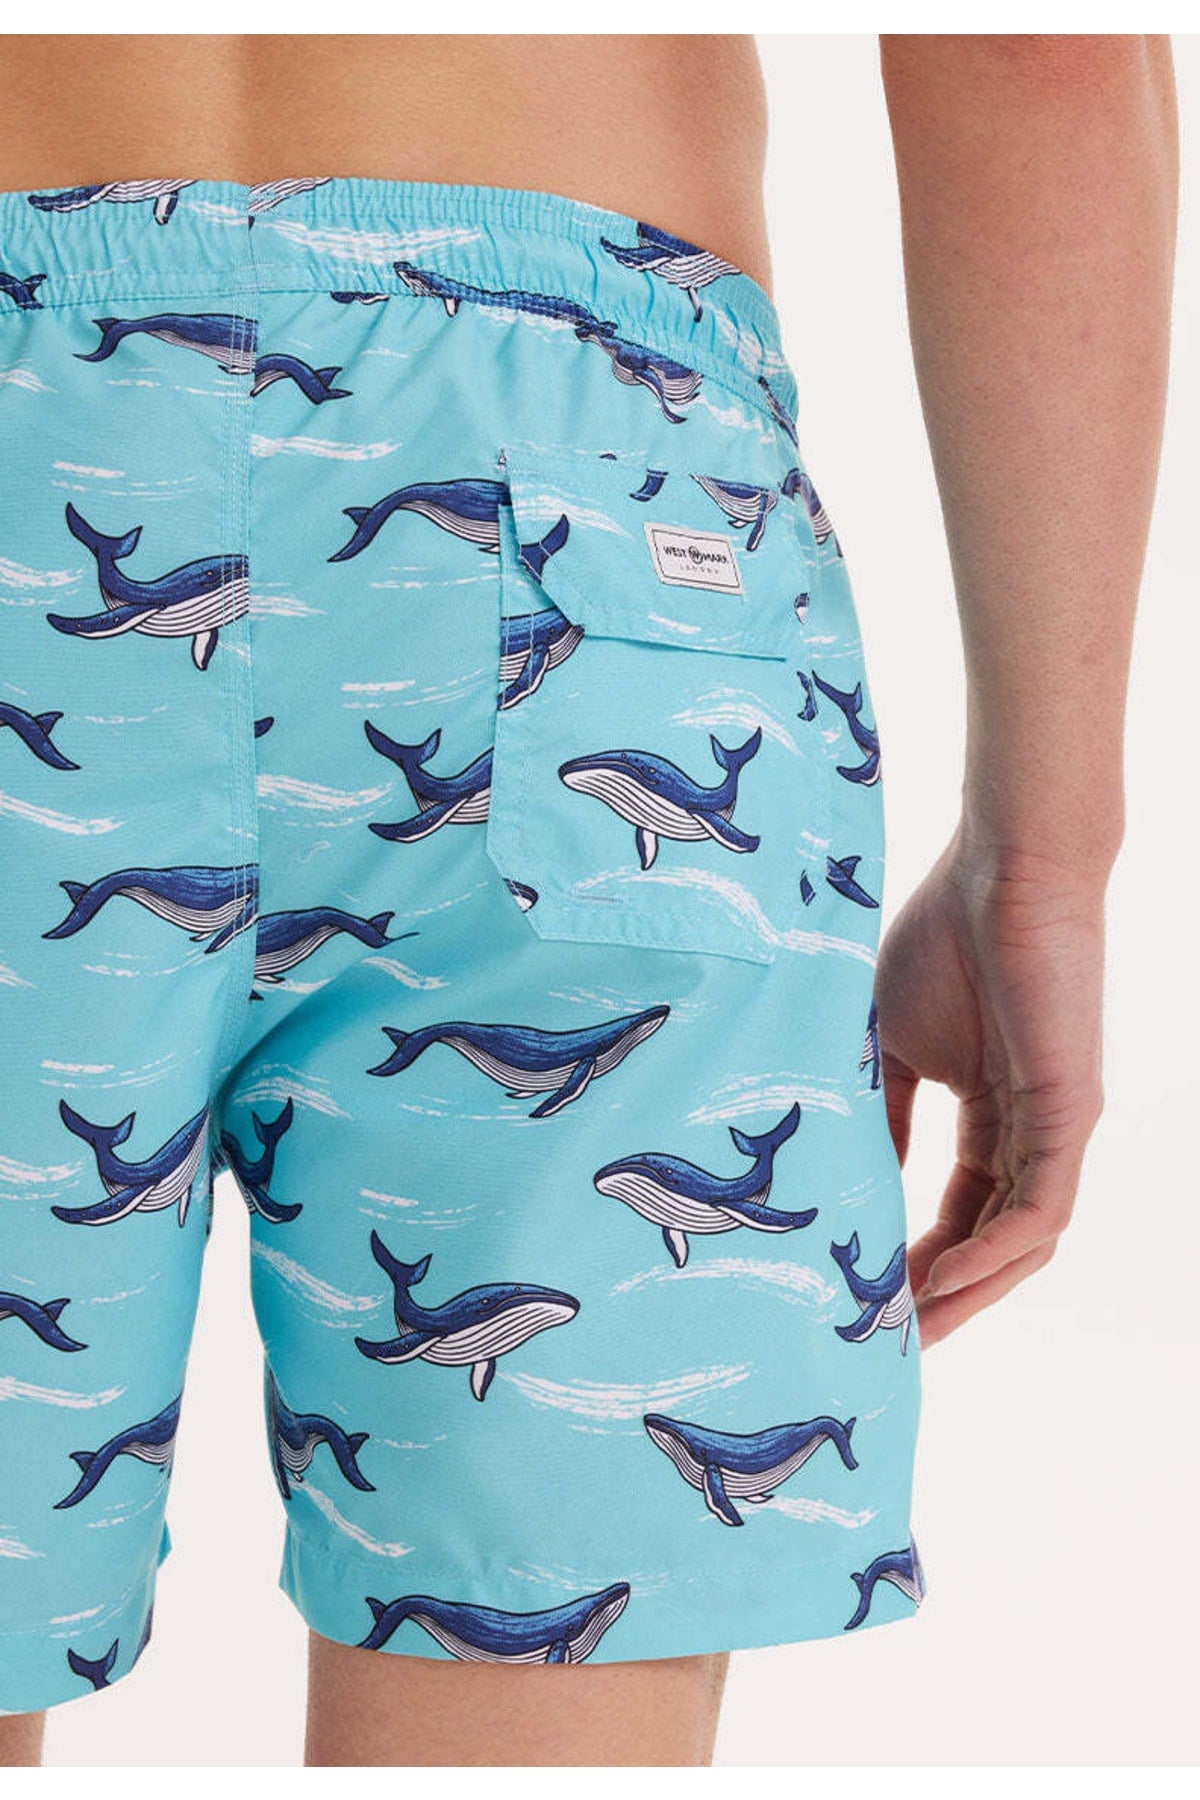 Men's Turquoise Printed Marine Shorts Wmpattern Swımshorts